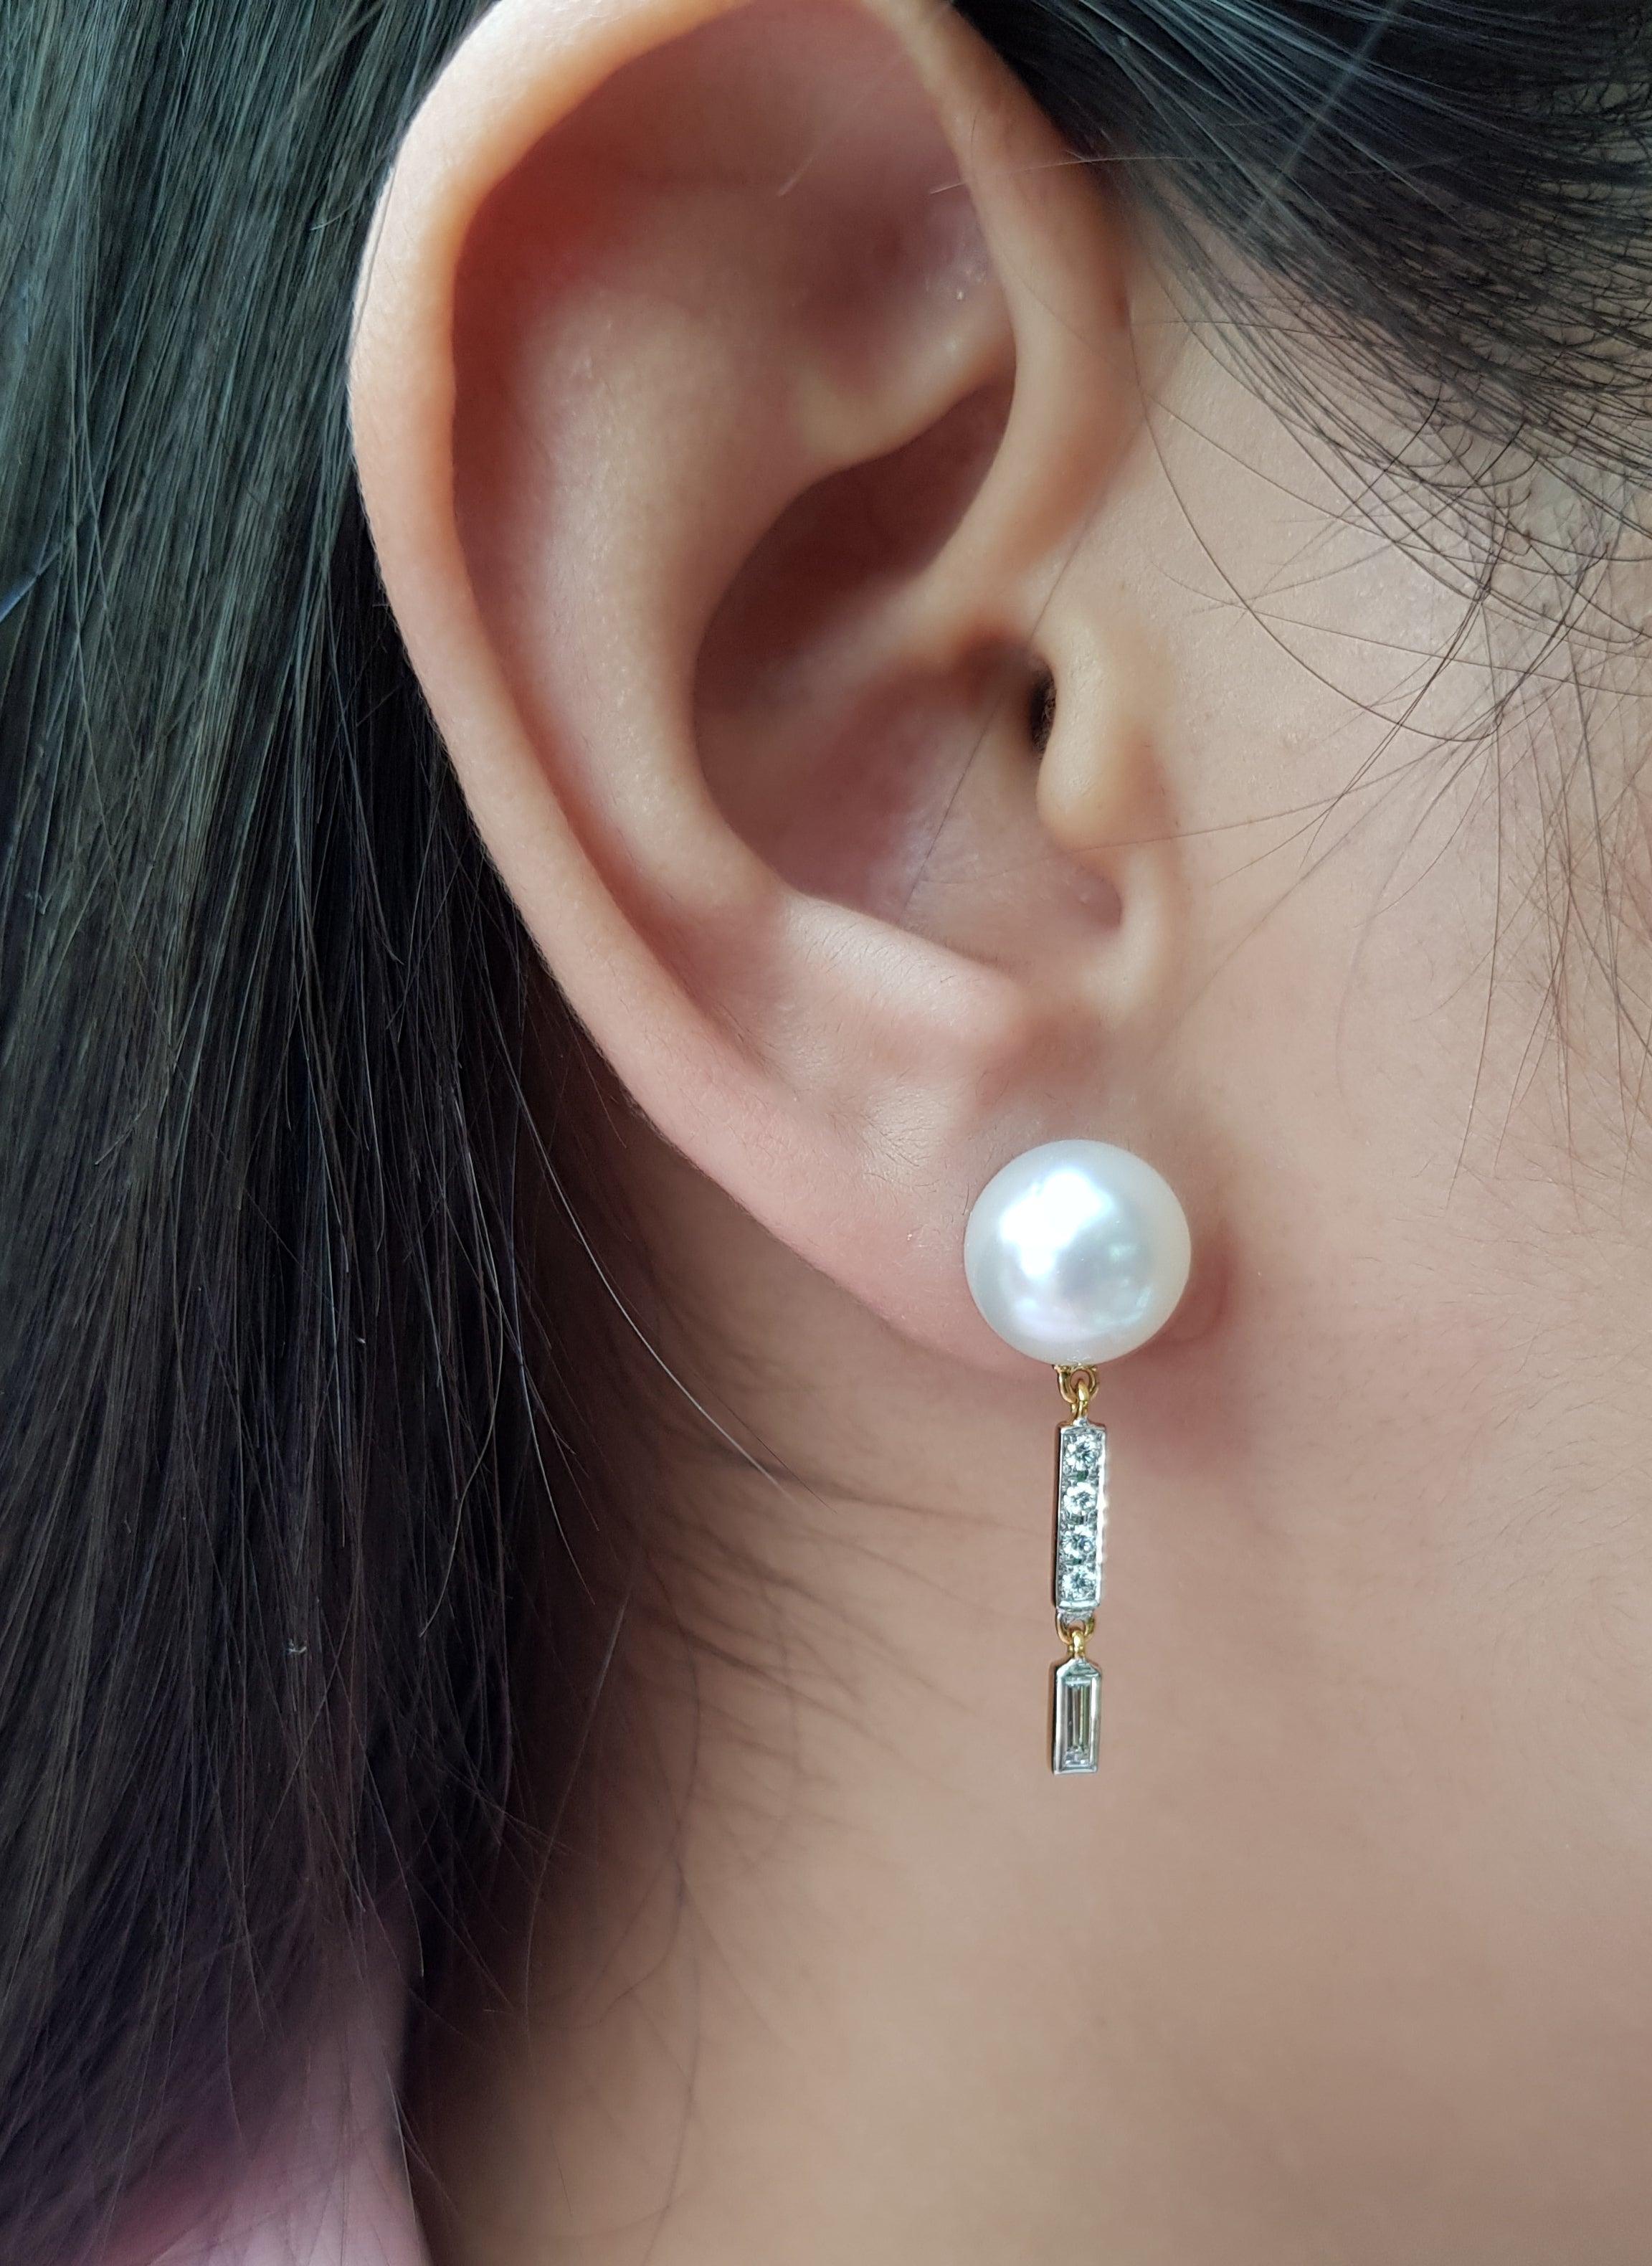 South Sea Pearl with Diamond 0.35 carats Earrings set in 18 Karat Gold Settings

Width: 1.0 cm
Length: 2.3 cm 

